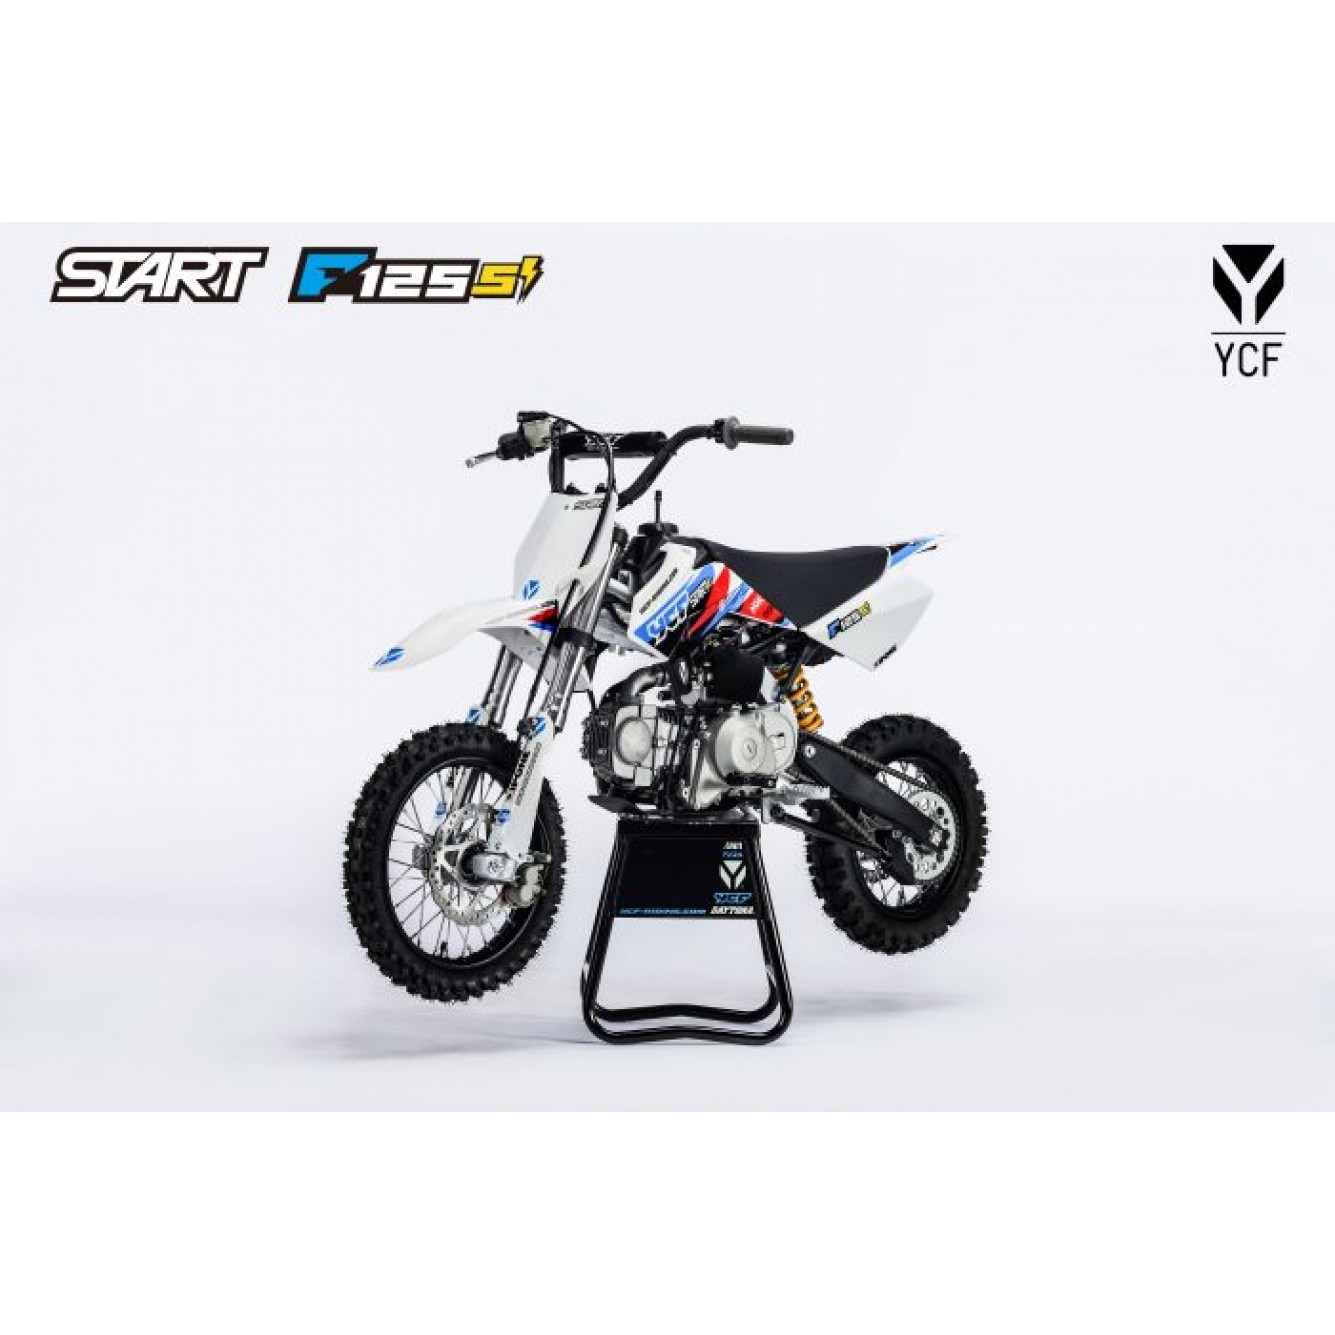 YCF | Pitbike Start F 125 SE